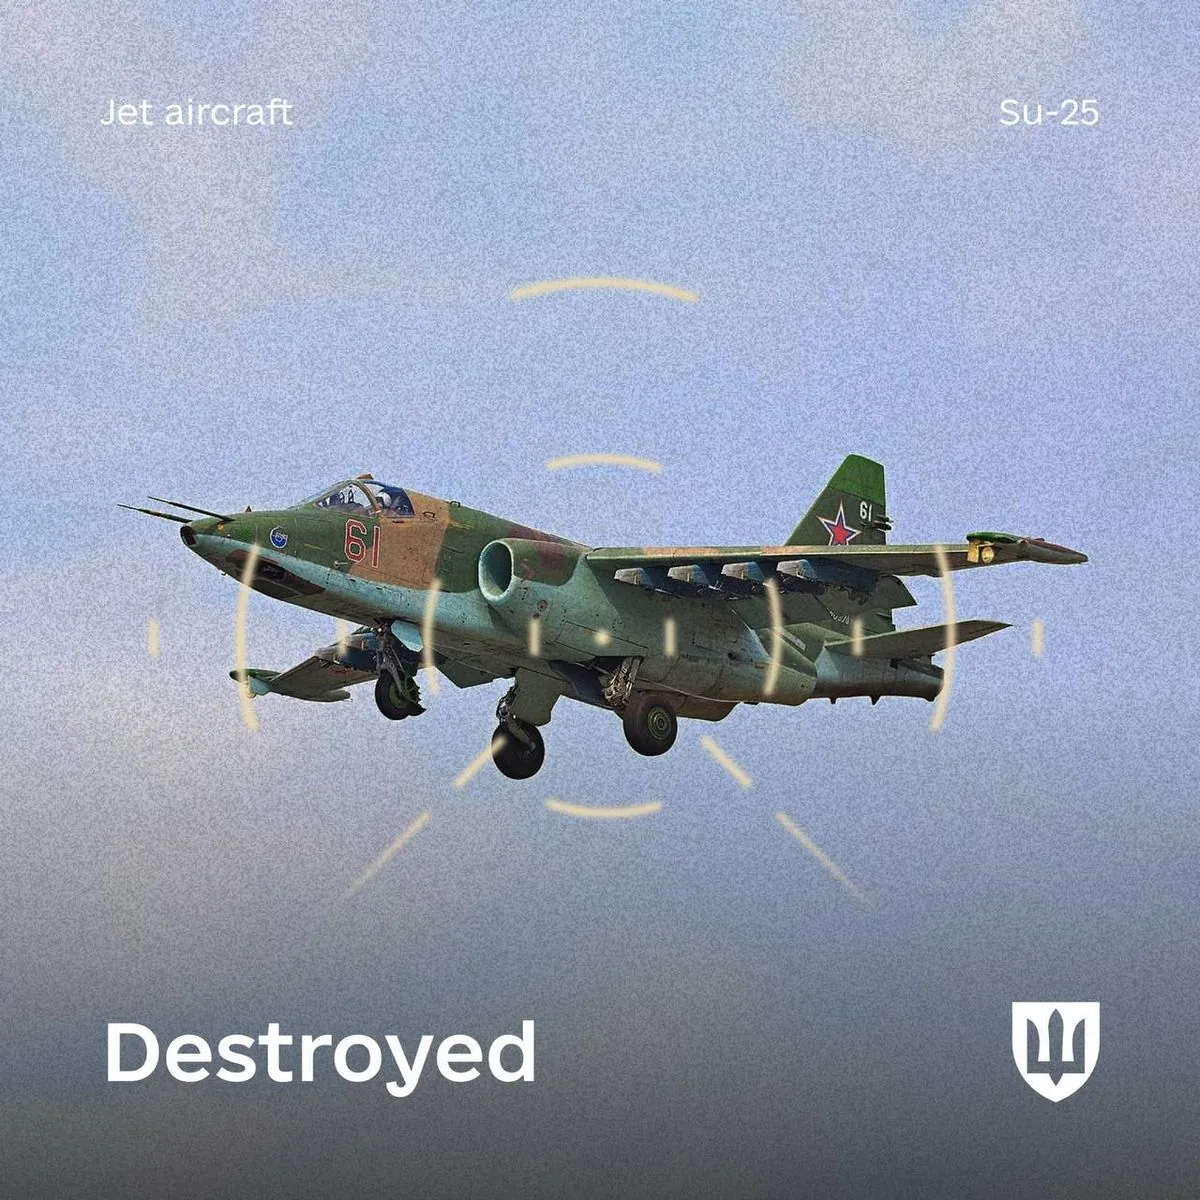 enemy-su-25-plane-destroyed-in-pokrovsky-direction-general-staff